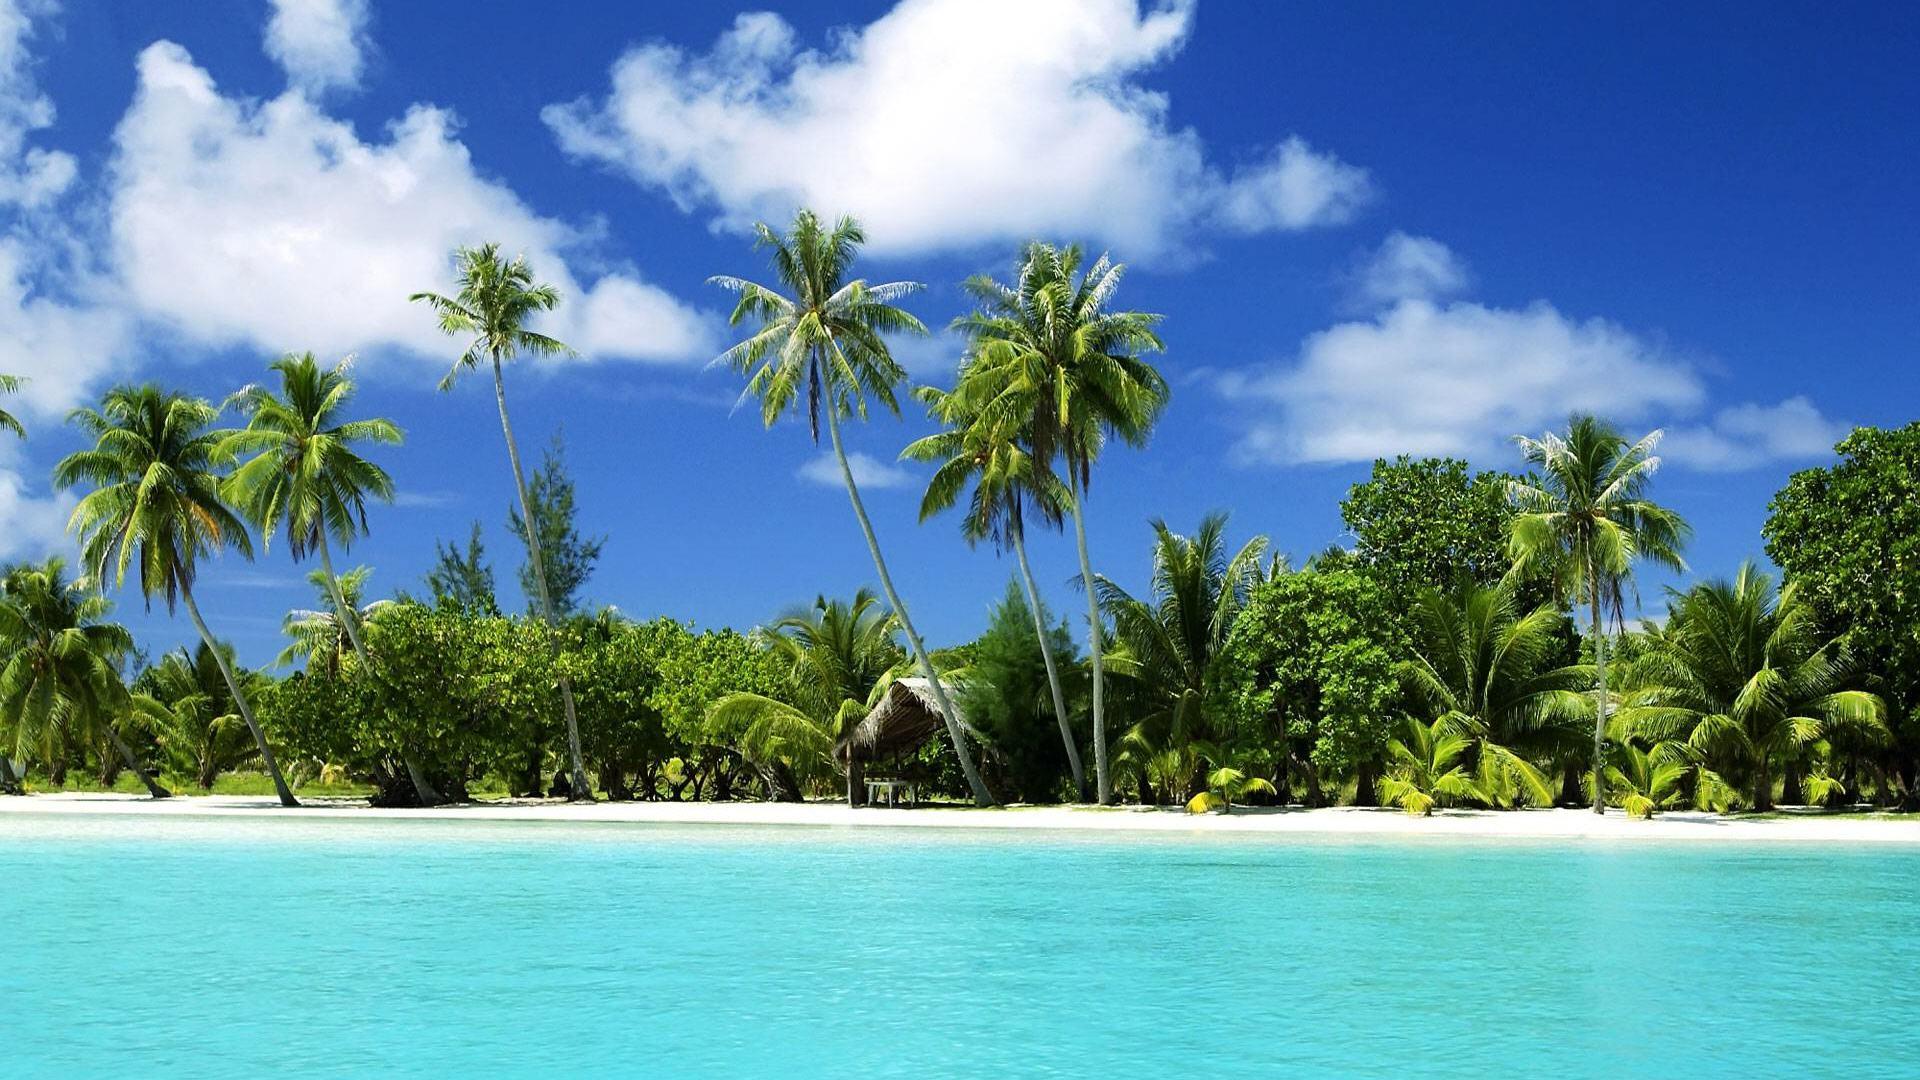 Tropical Island Beach Landscape Wallpaper at